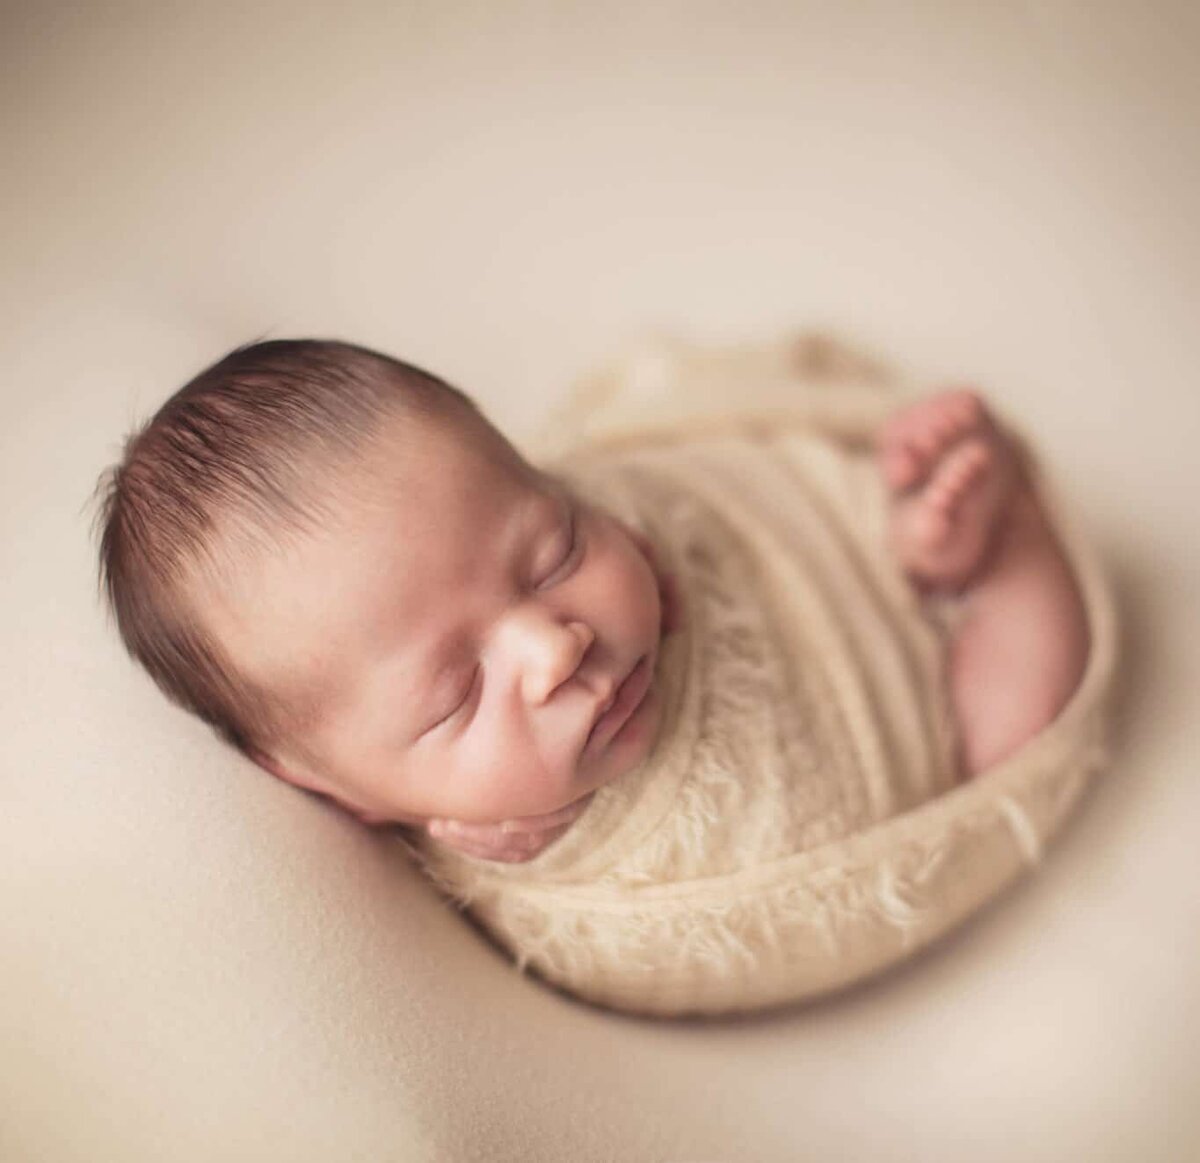 austin newborn portraits, newborn photoshoot Austin, Best newborn photographers in Austin, best newborn photography Austin